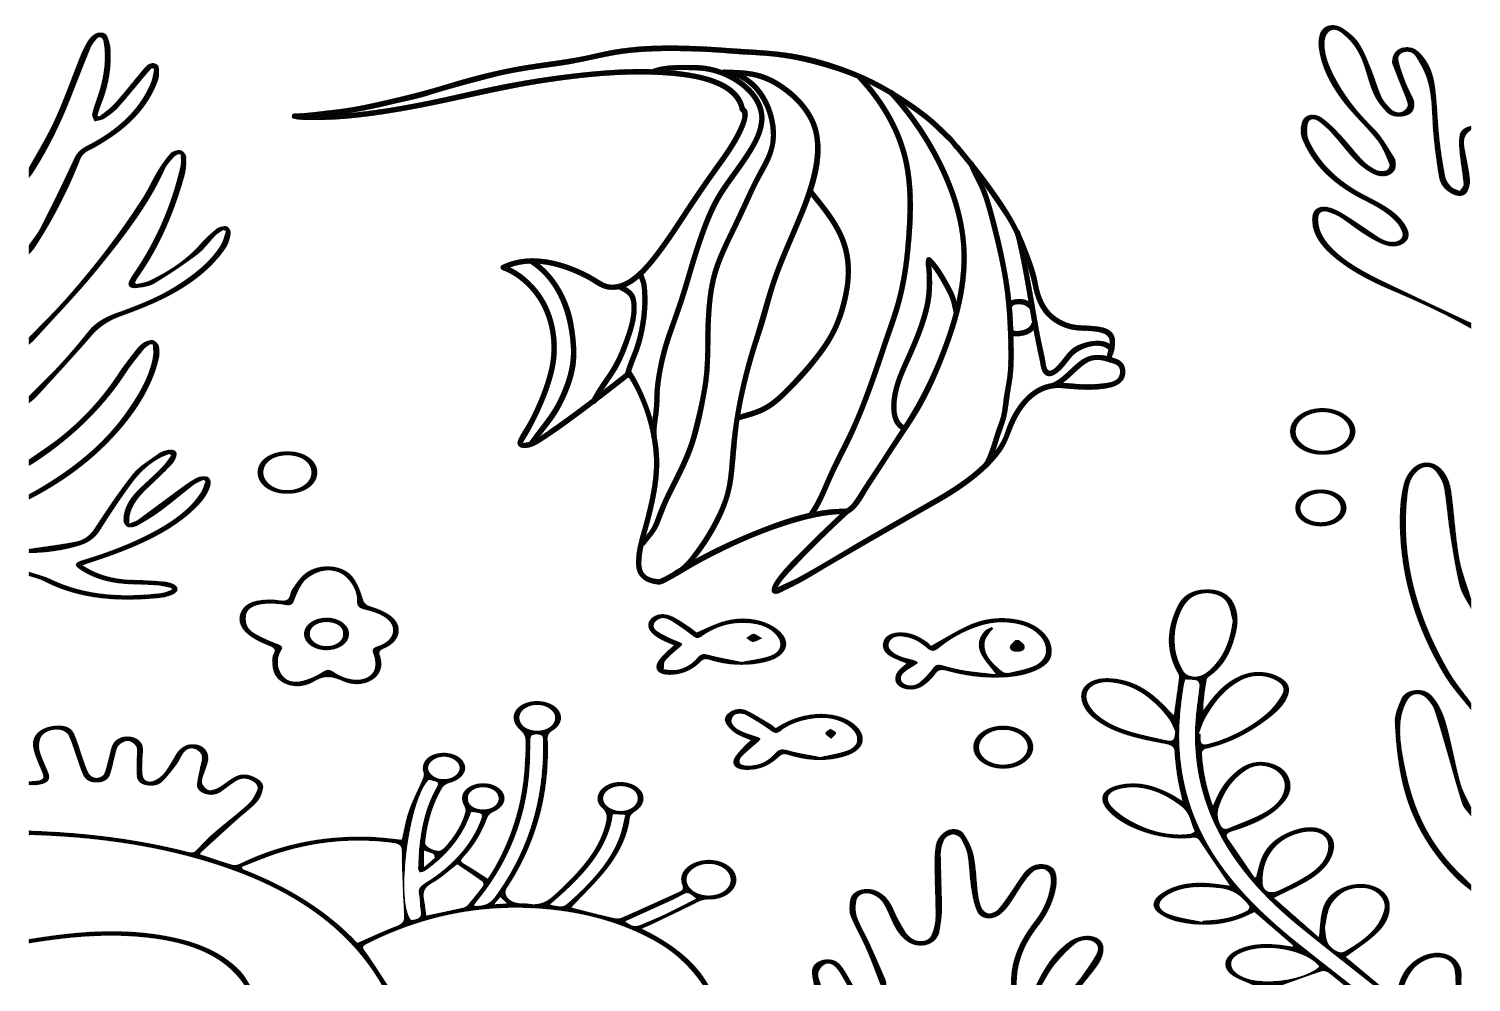 Pennant Coralfish для детей от Pennant Coralfish